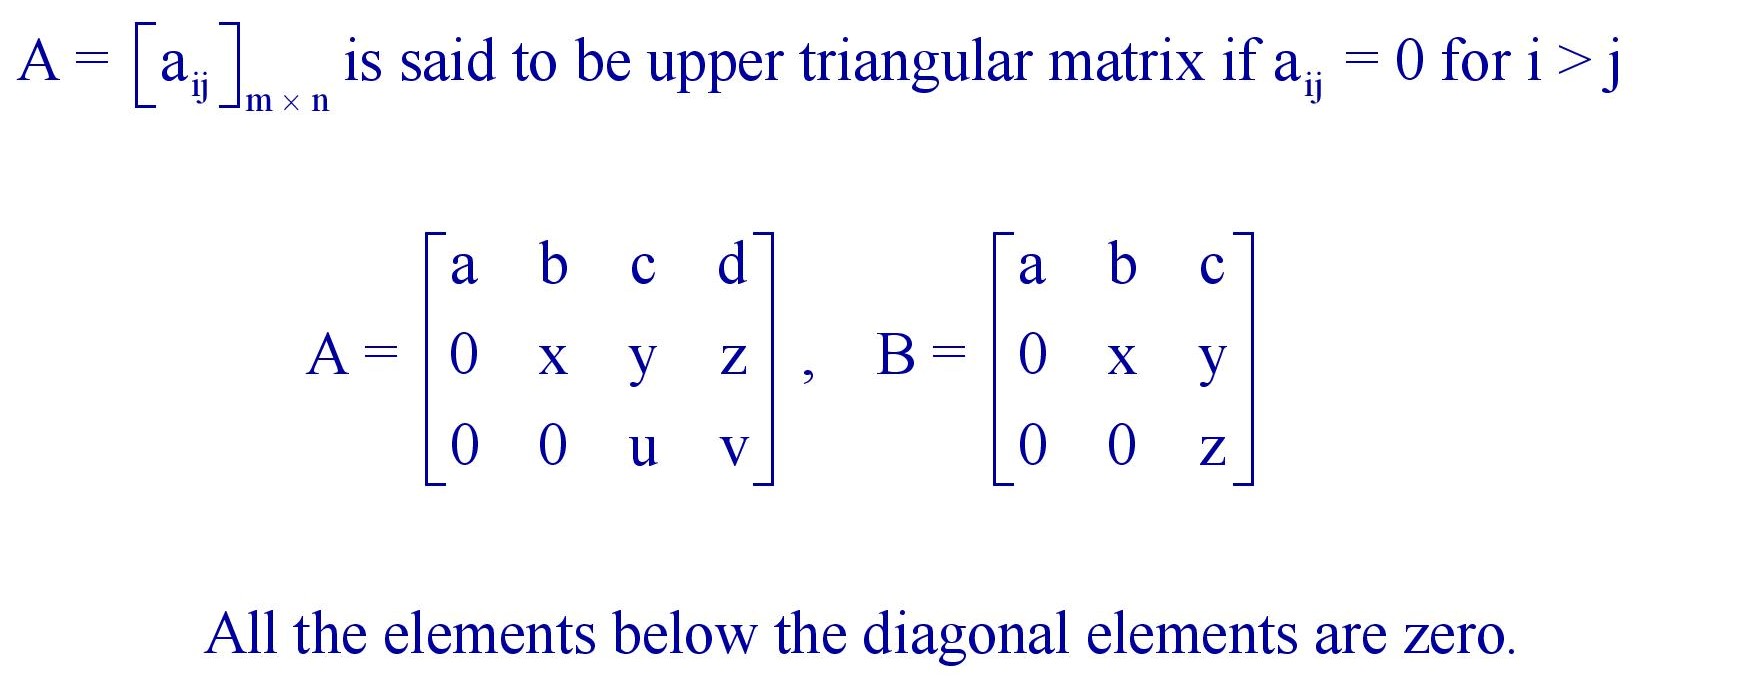 Upper triangular Matrix